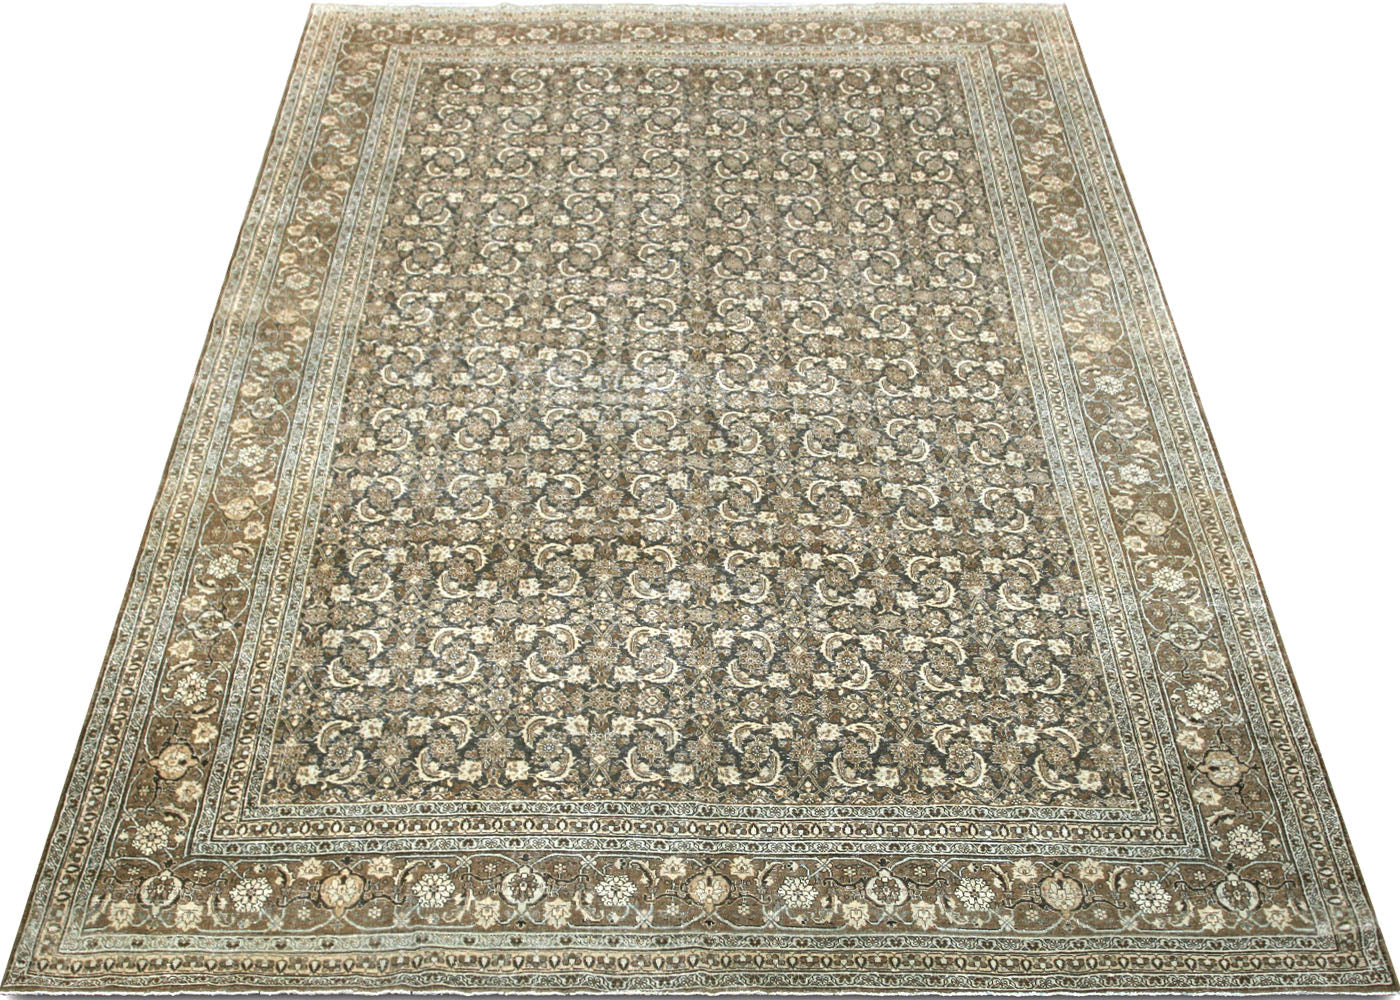 Semi Antique Persian Tabriz Rug - 10' x 14'1"